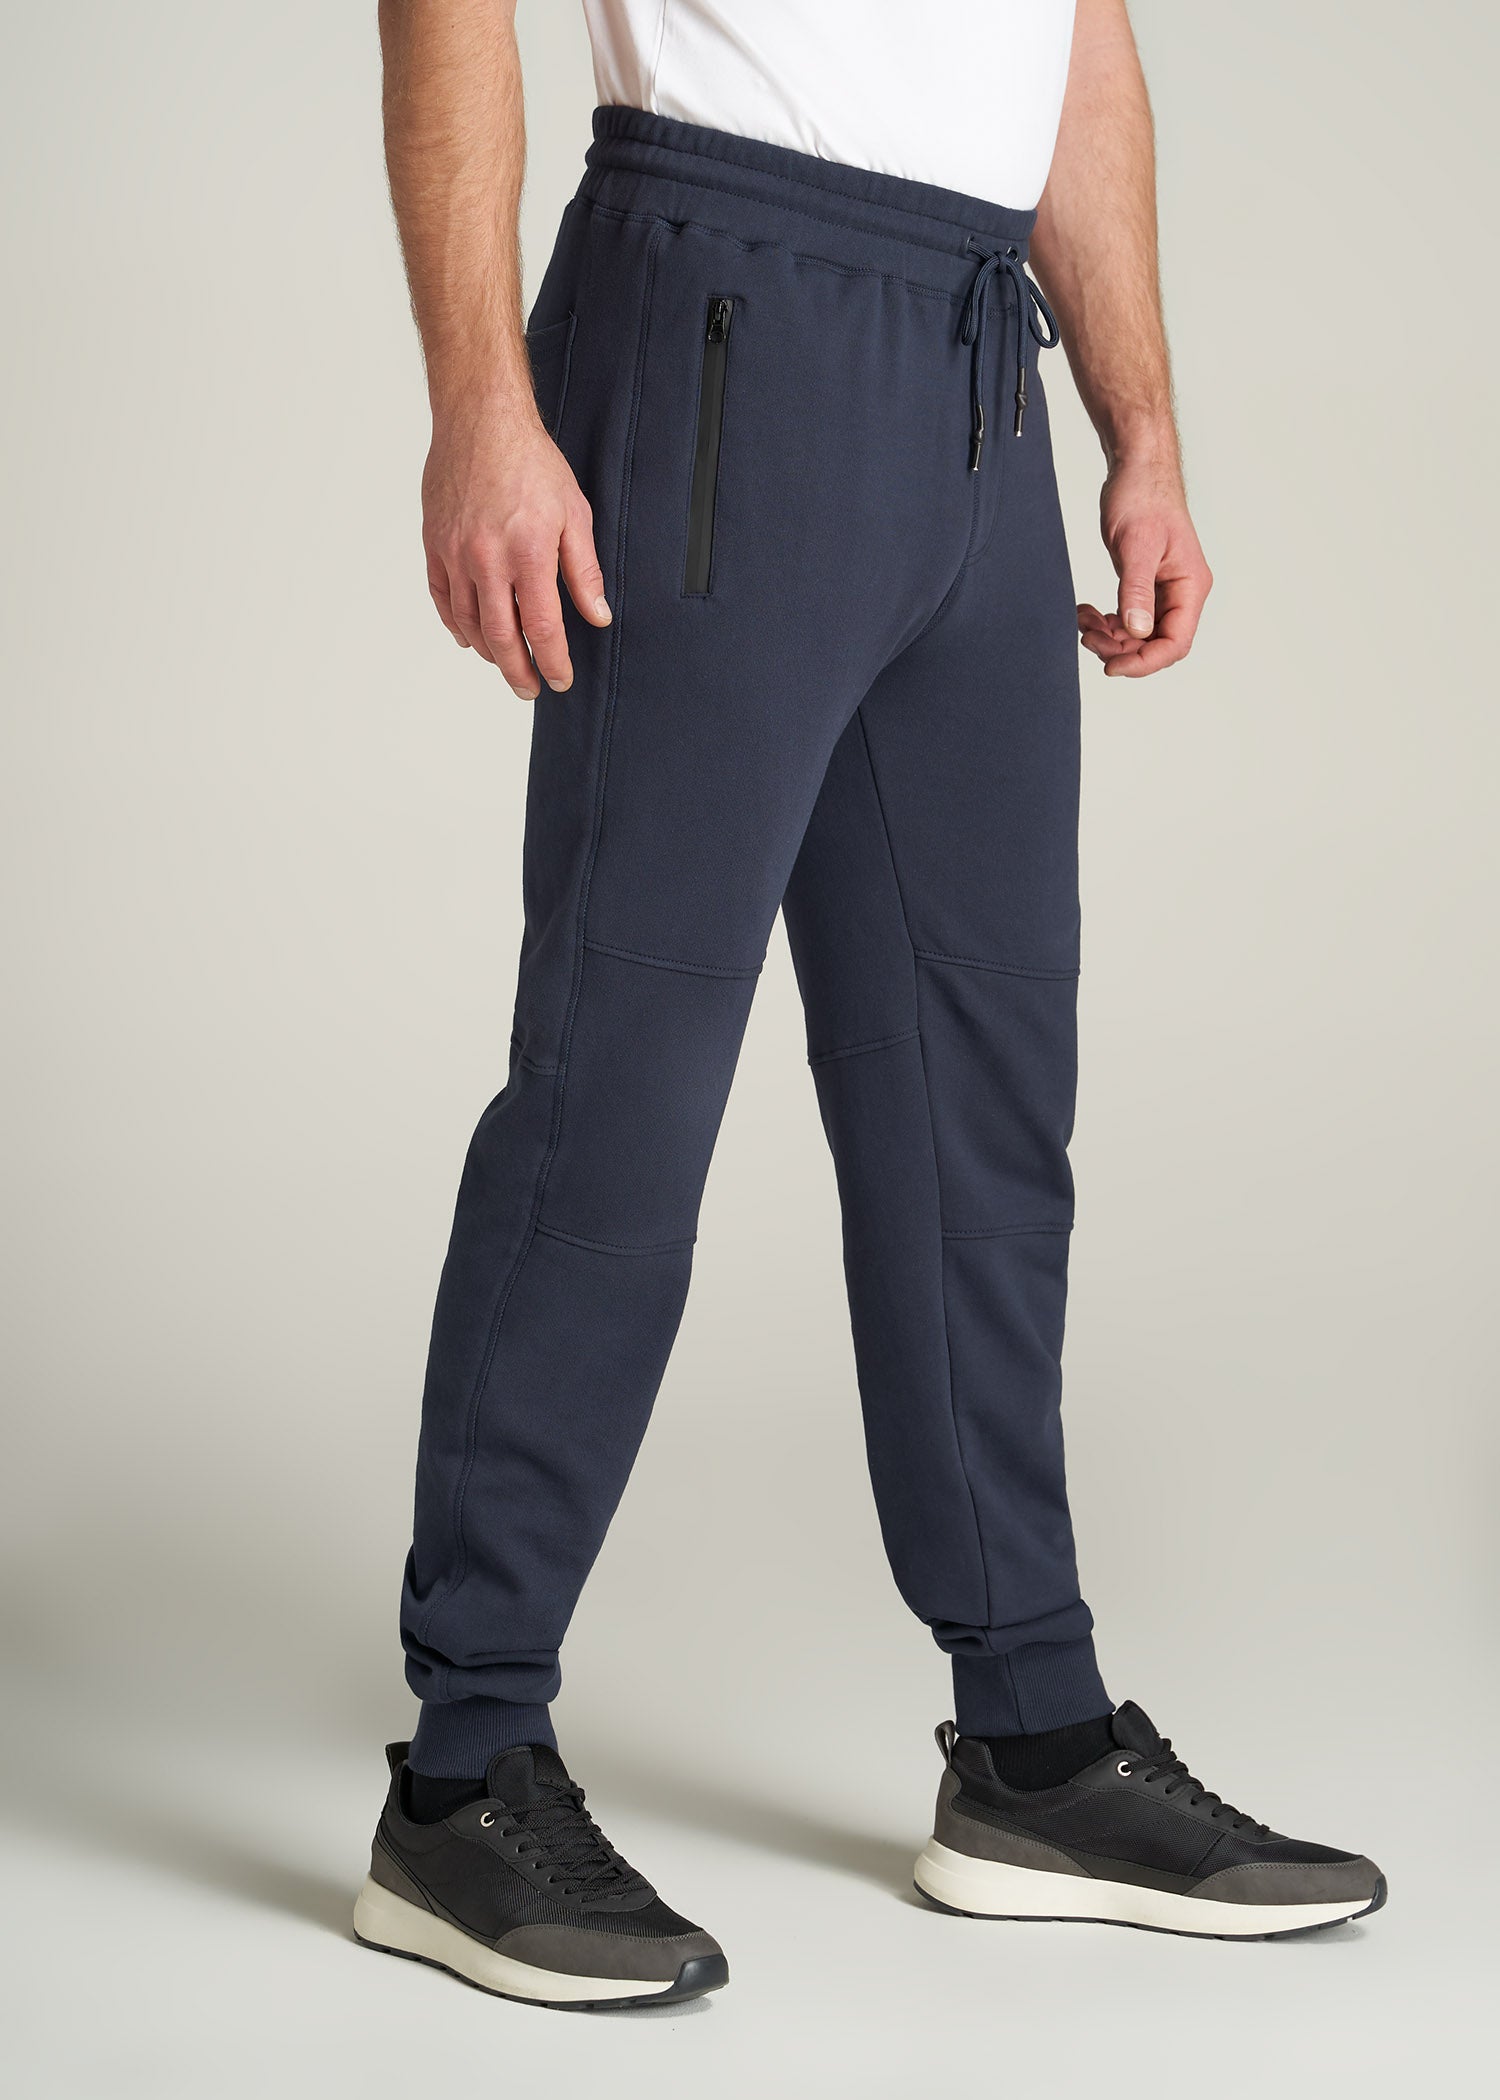 Wearever Fleece Open-Bottom Sweatpants for Tall Men in Navy